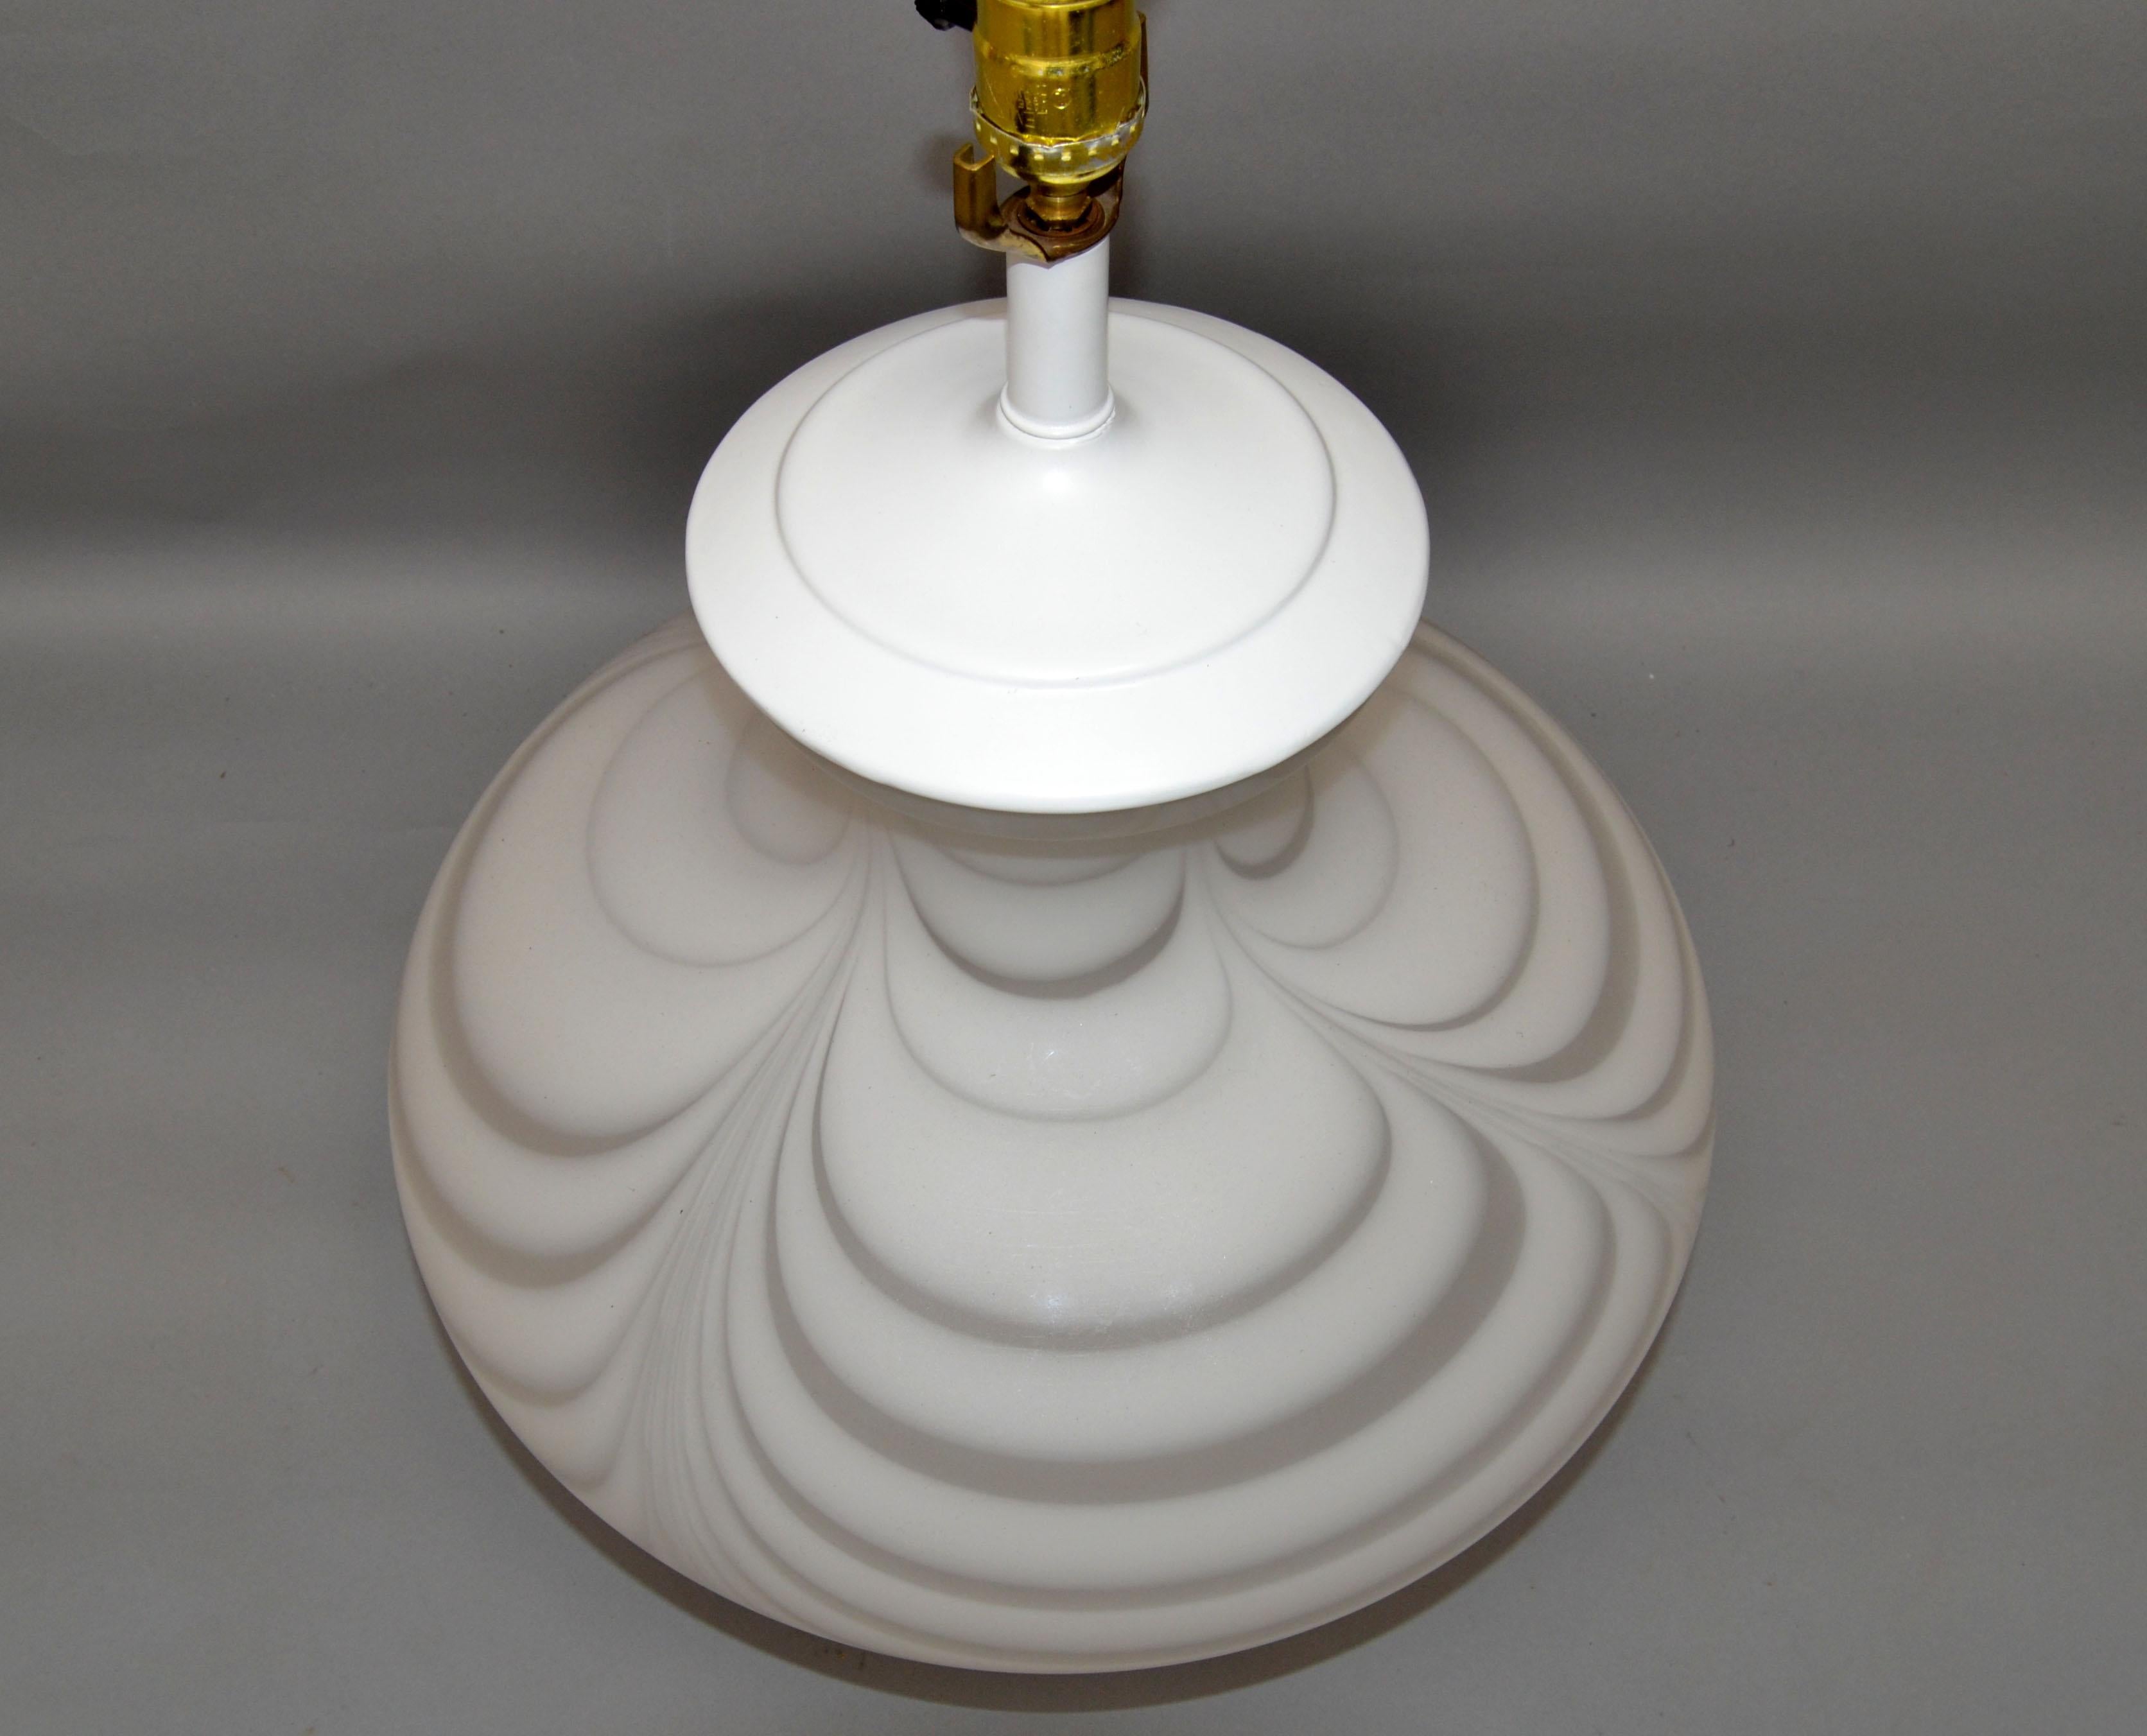 Mazzega Murano Style Table Lamp Swirled Mottled White Murano Glass 1970 Italy For Sale 2